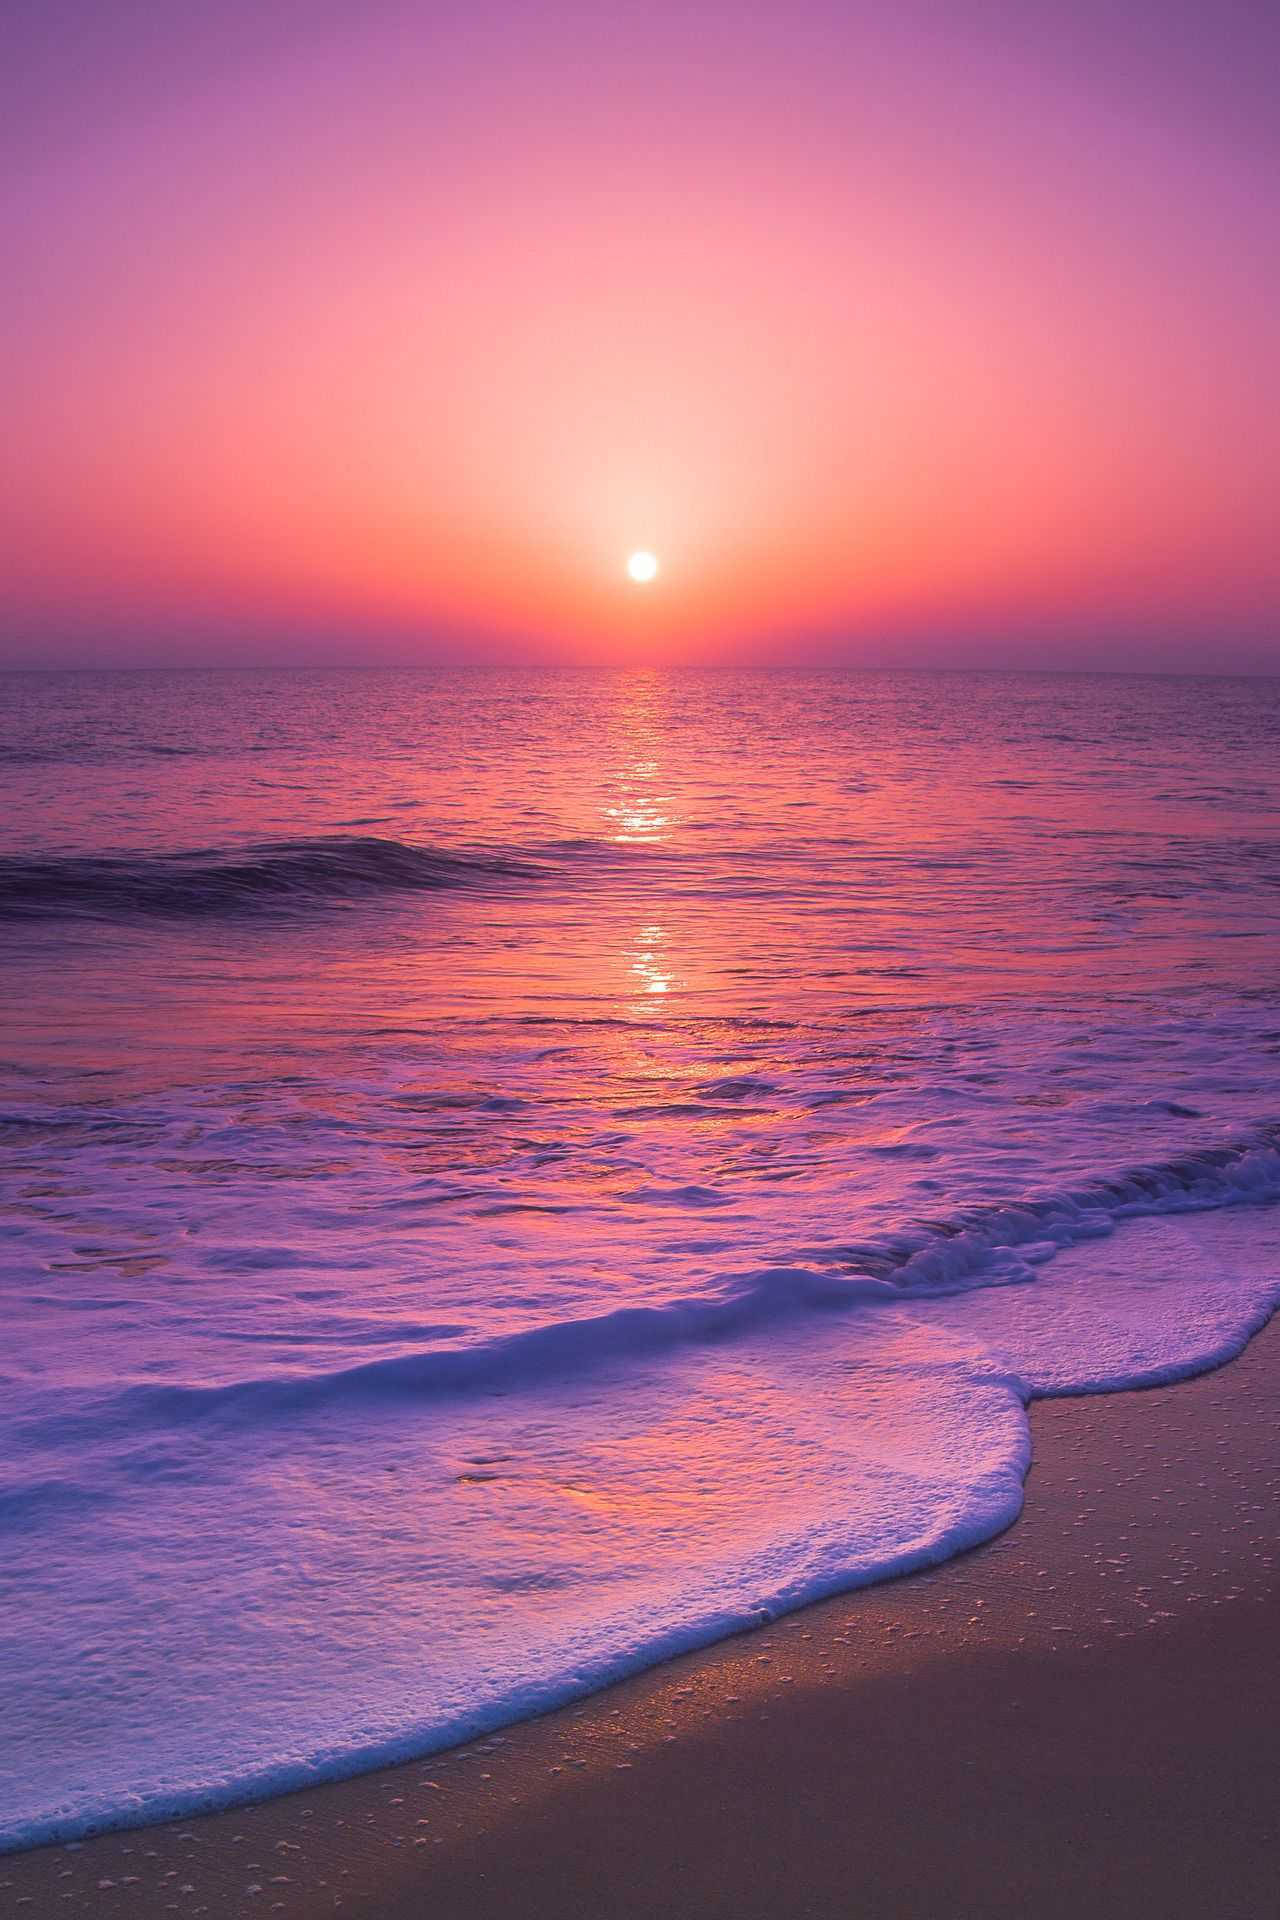 Pink sunset calm sea sandy beach dry tree reflection Wallpaper HD   Wallpapers13com